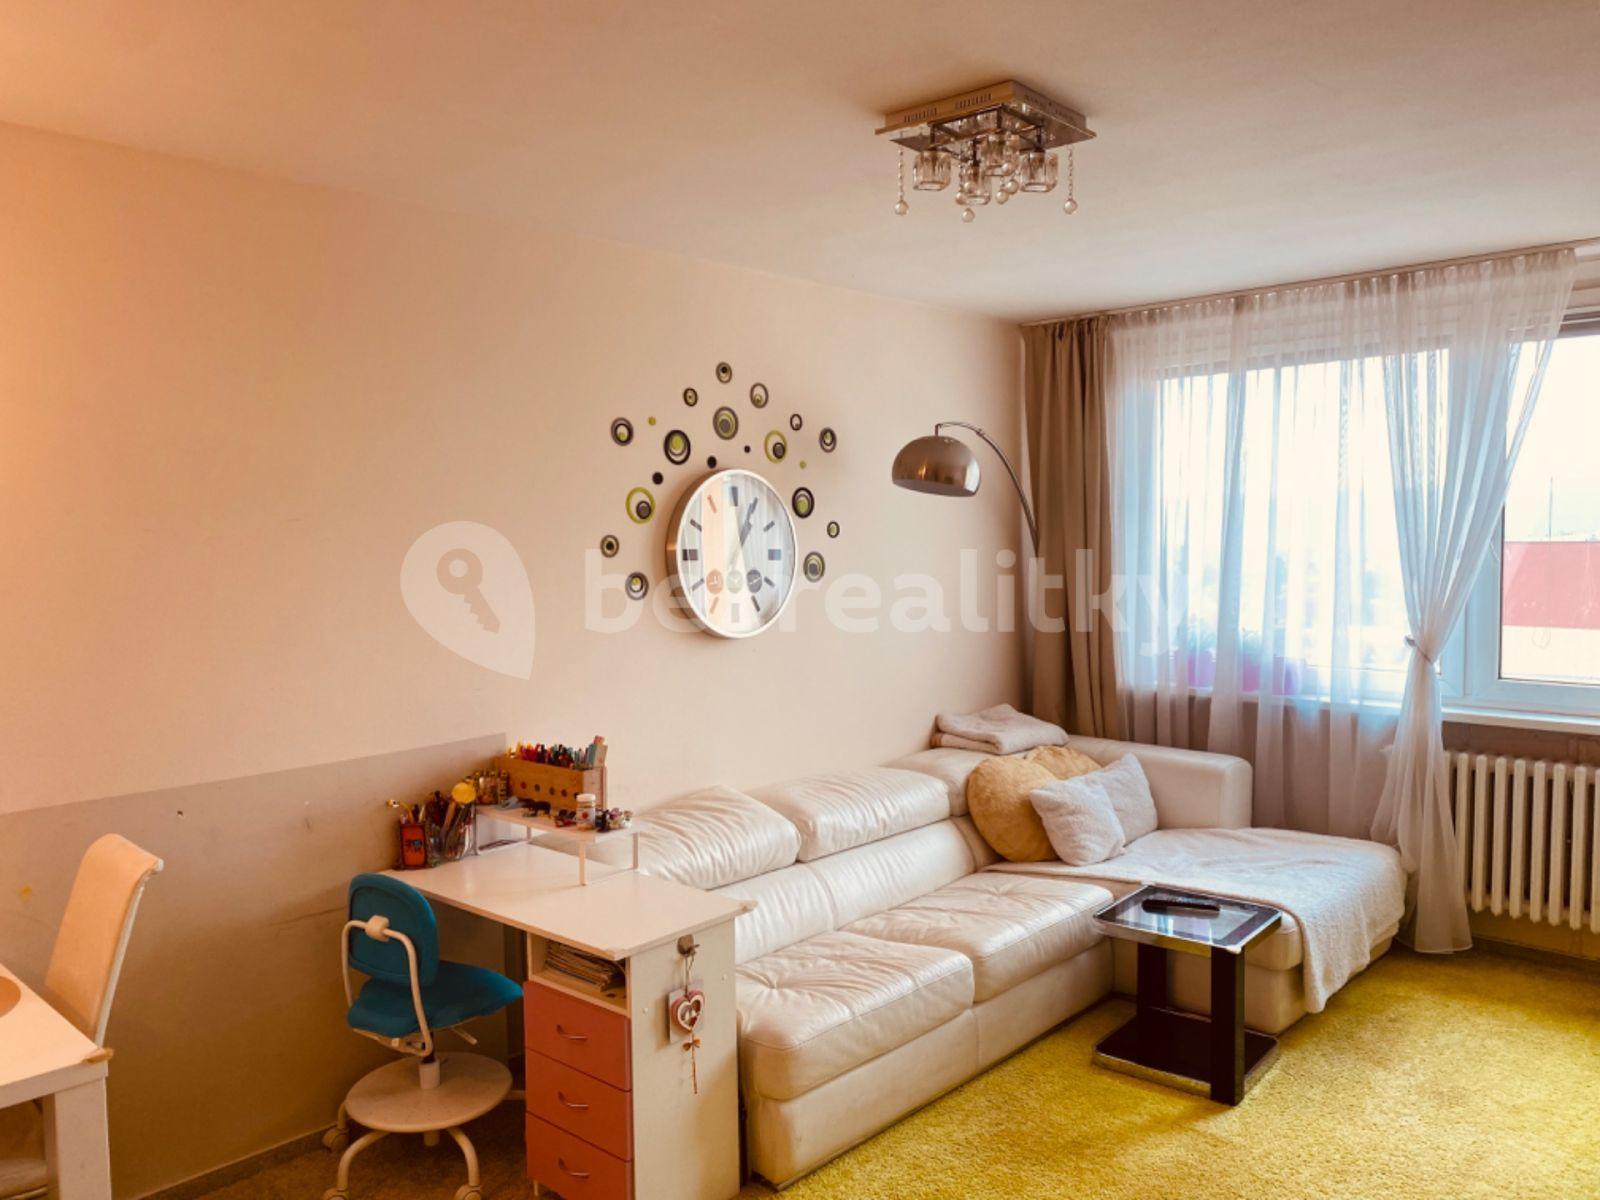 1 bedroom with open-plan kitchen flat for sale, 45 m², Krouzova, Prague, Prague